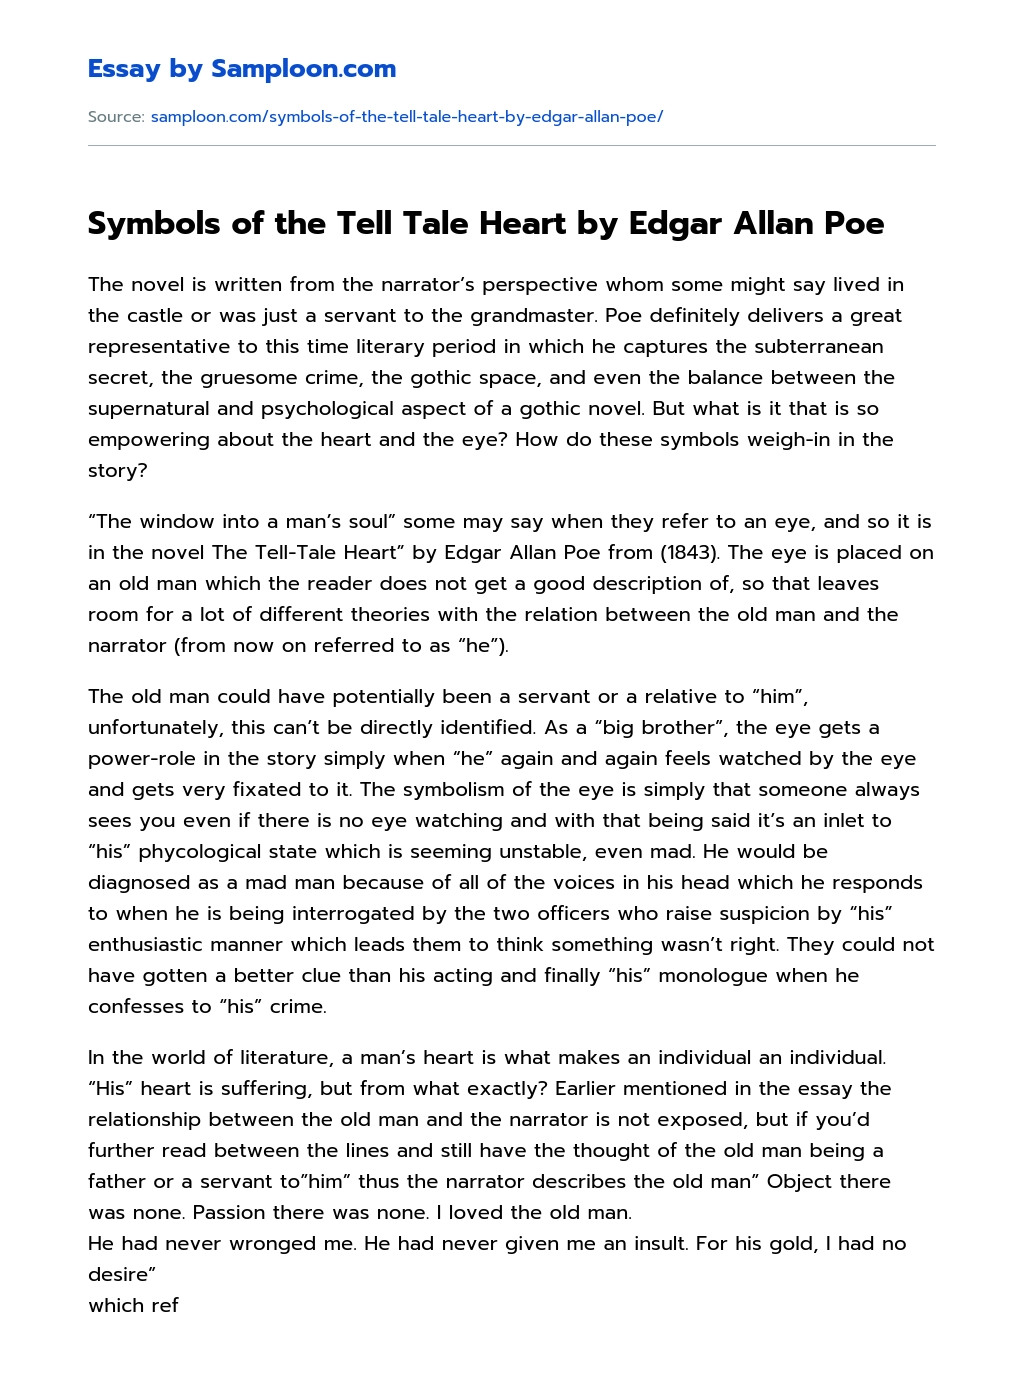 Symbols of the Tell Tale Heart by Edgar Allan Poe essay